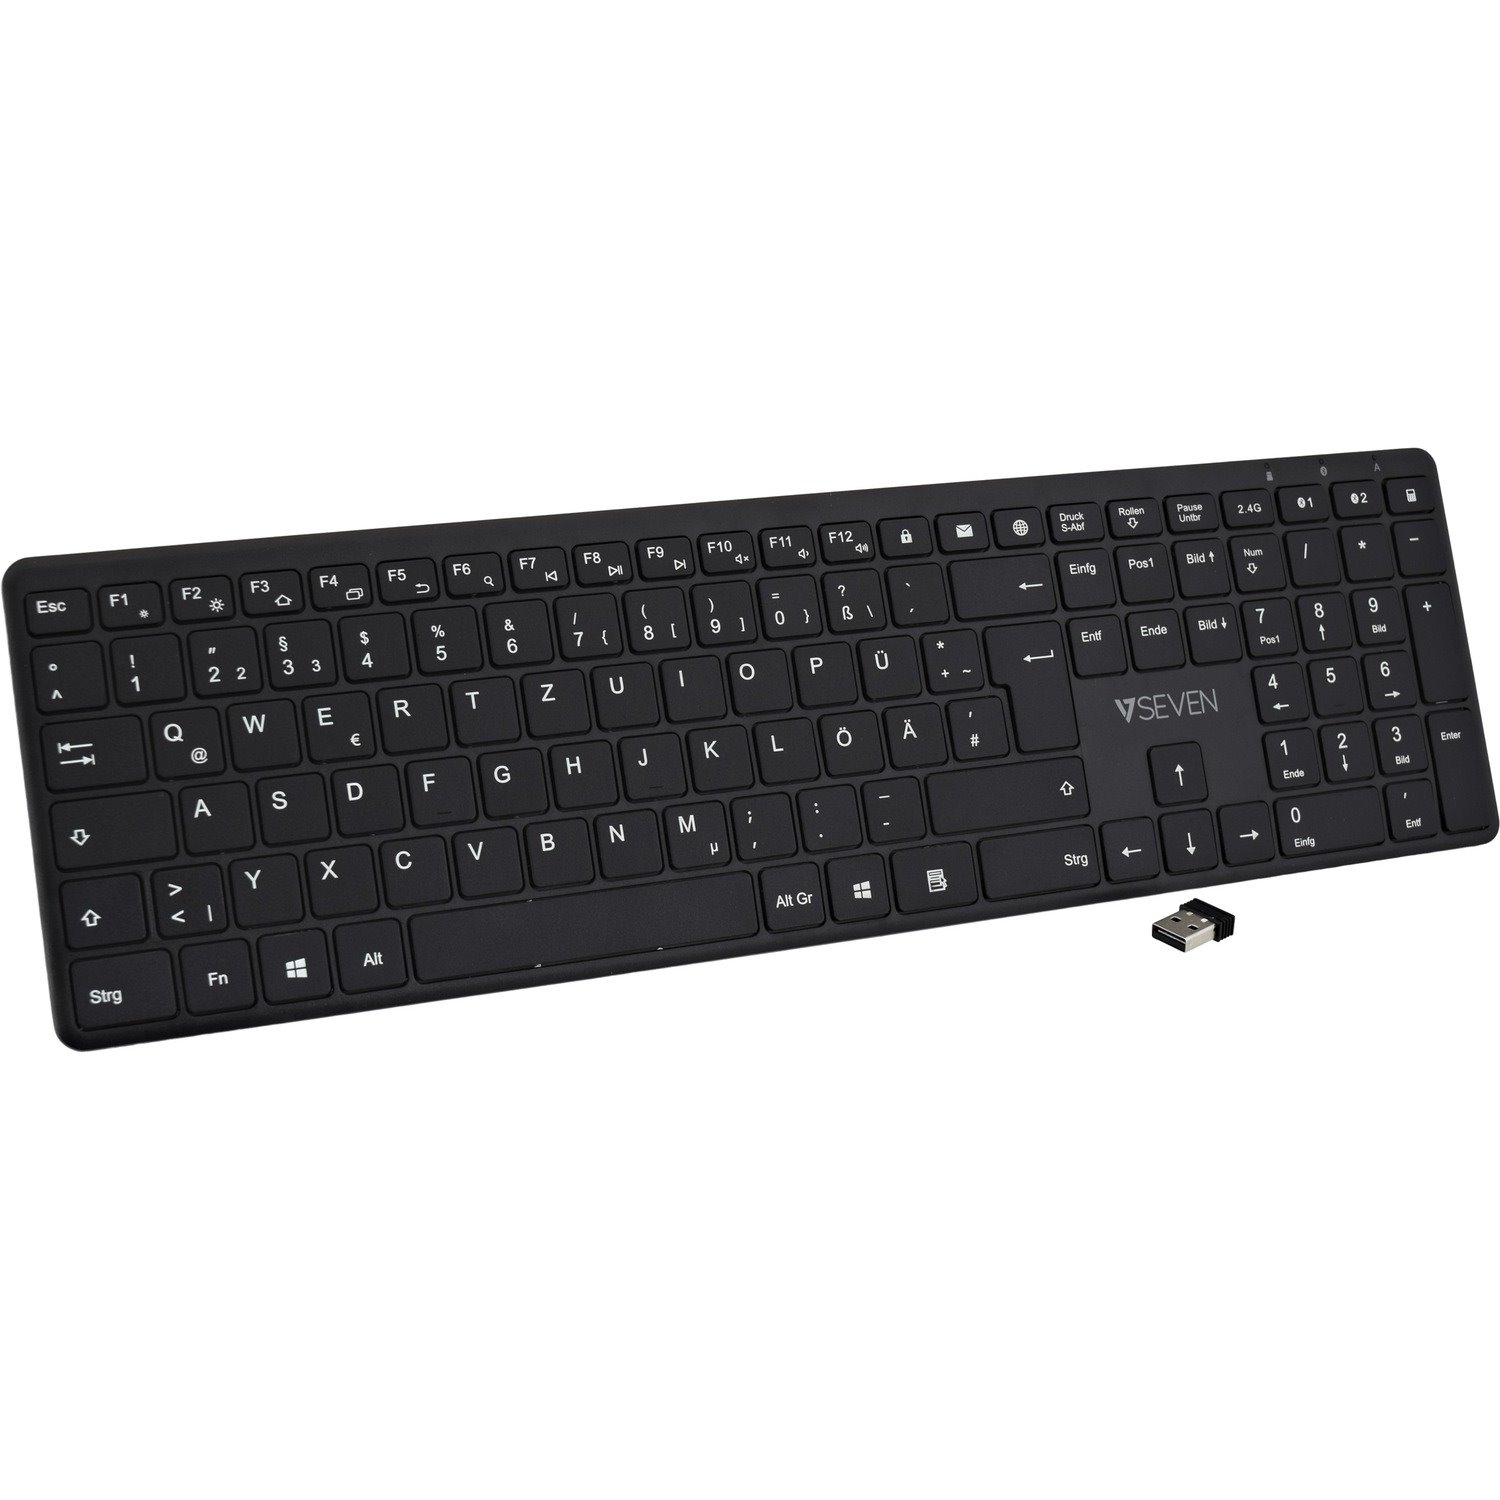 V7 KW550DEBT Keyboard - Wireless Connectivity - USB Interface - German - QWERTZ Layout - Black